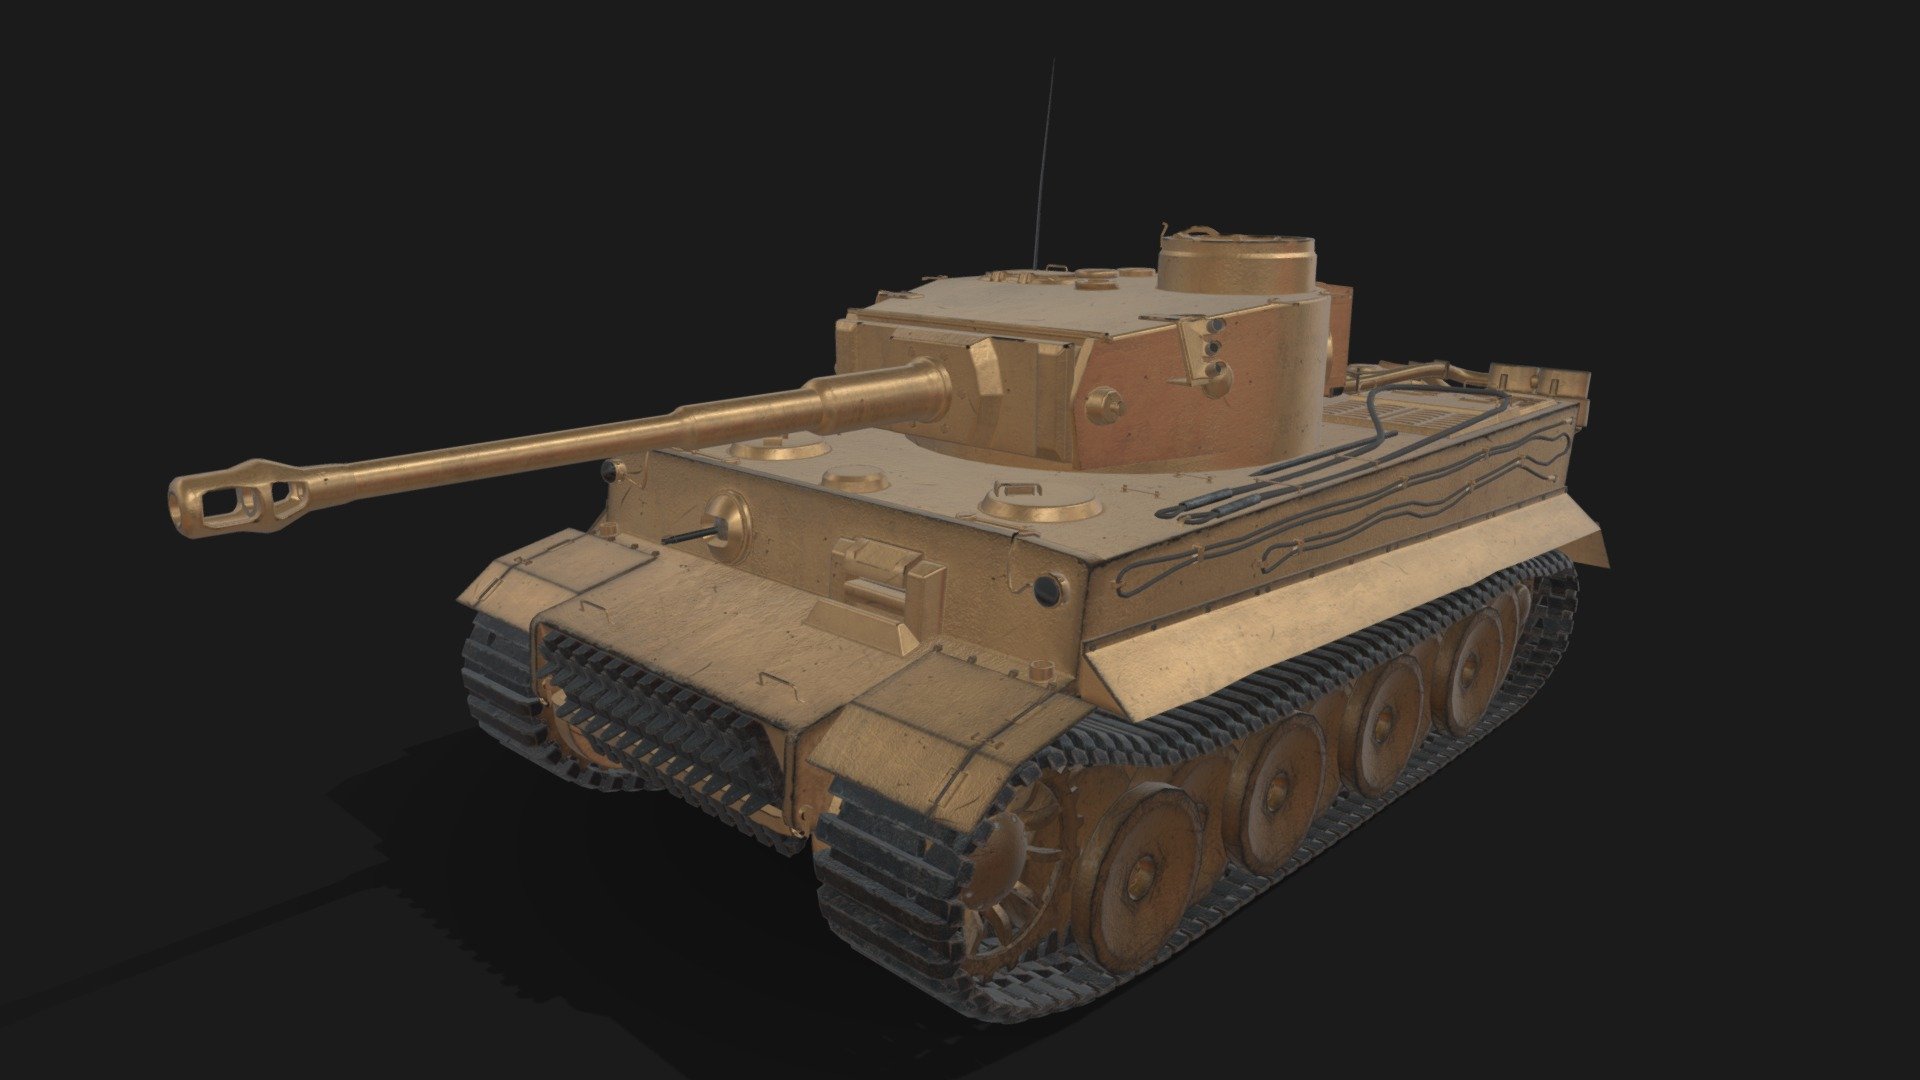 Tank Tiger Download Free 3d Model By Milotor1 M1lotor 139a59d Sketchfab